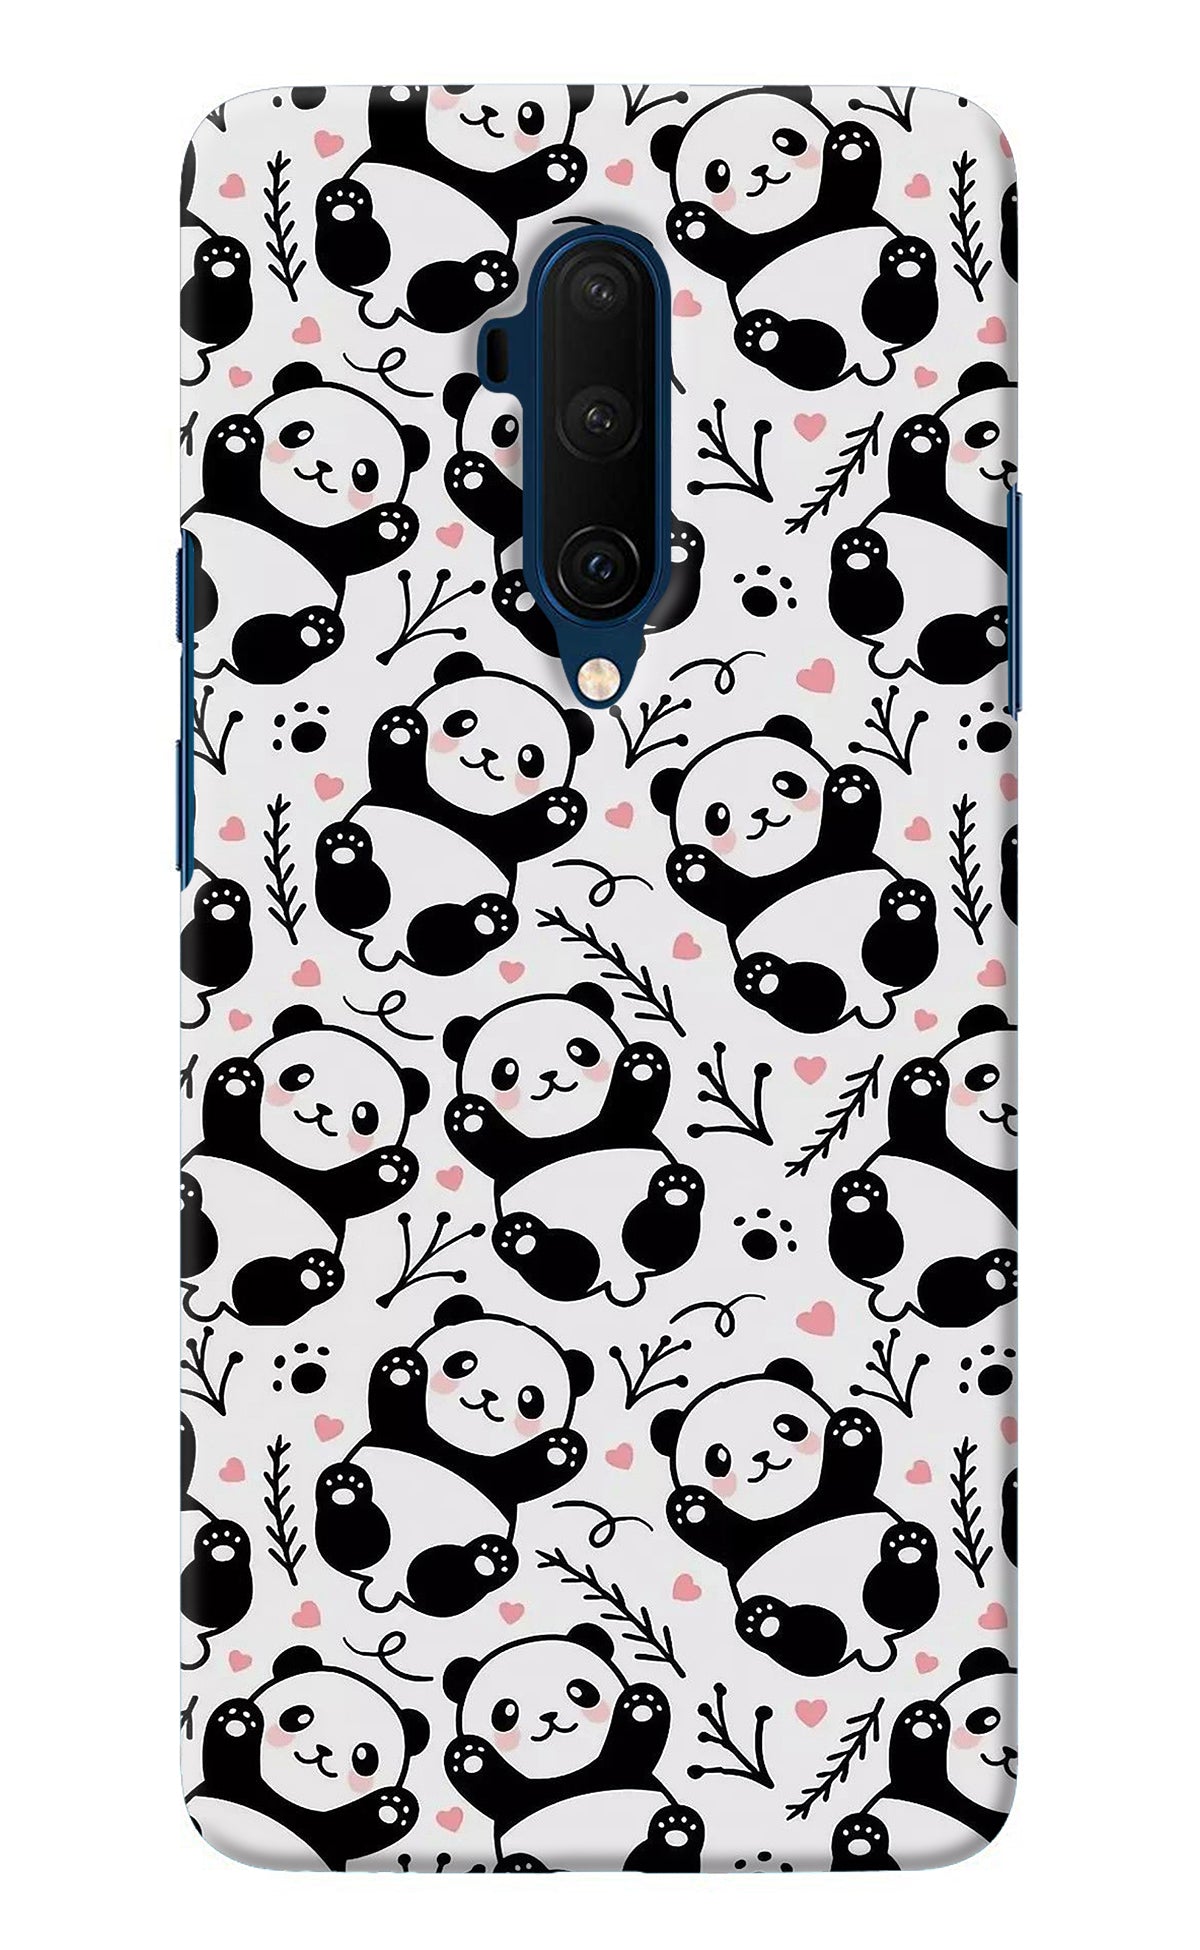 Cute Panda Oneplus 7T Pro Back Cover